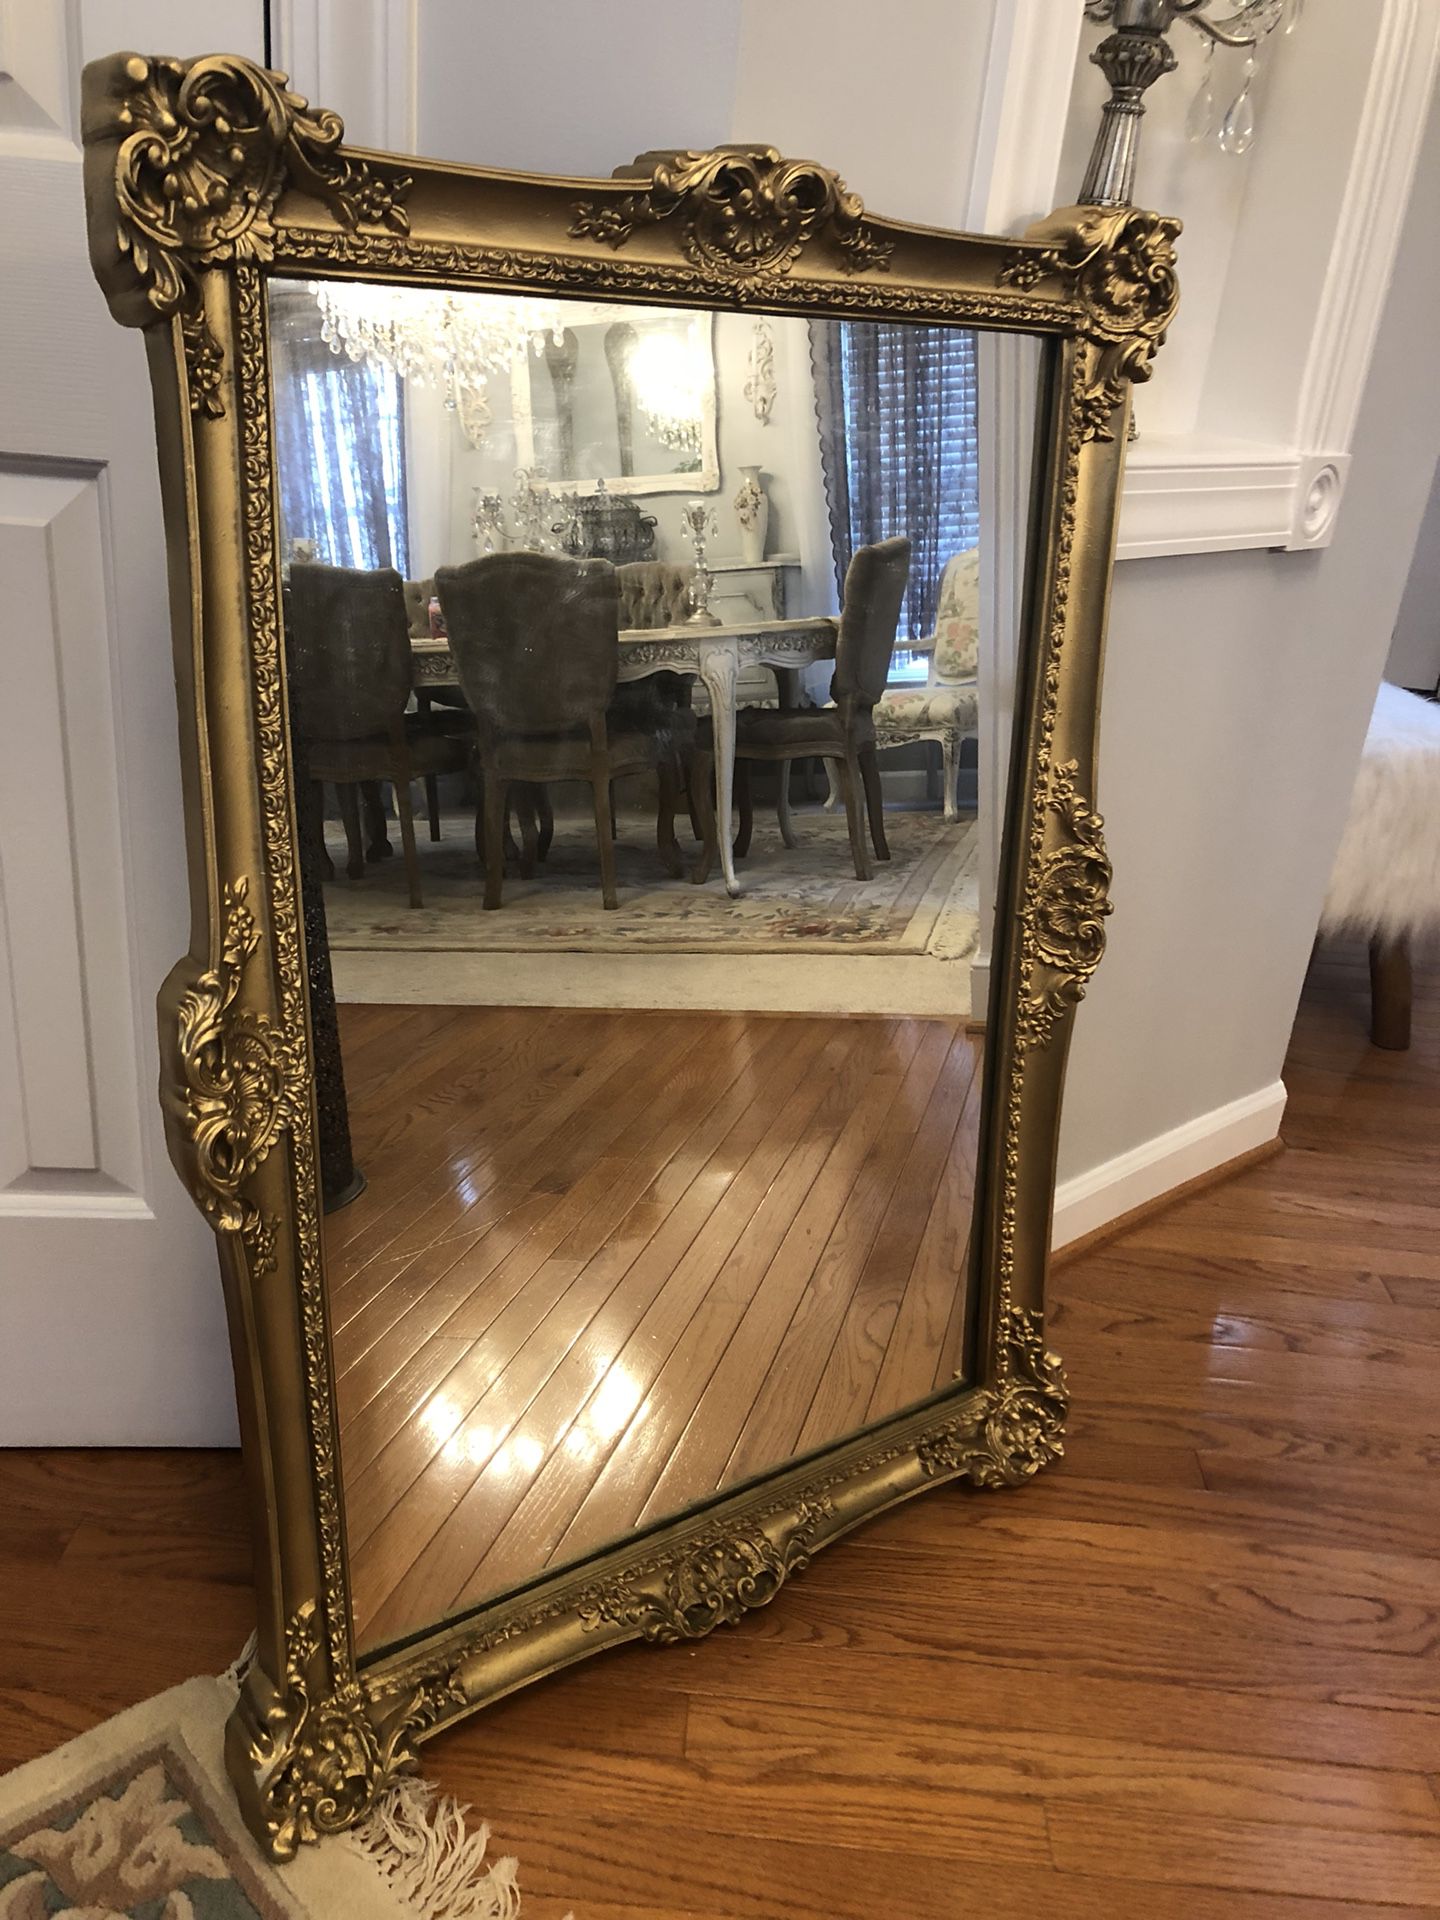 42”X30” Antique gold wood mirror